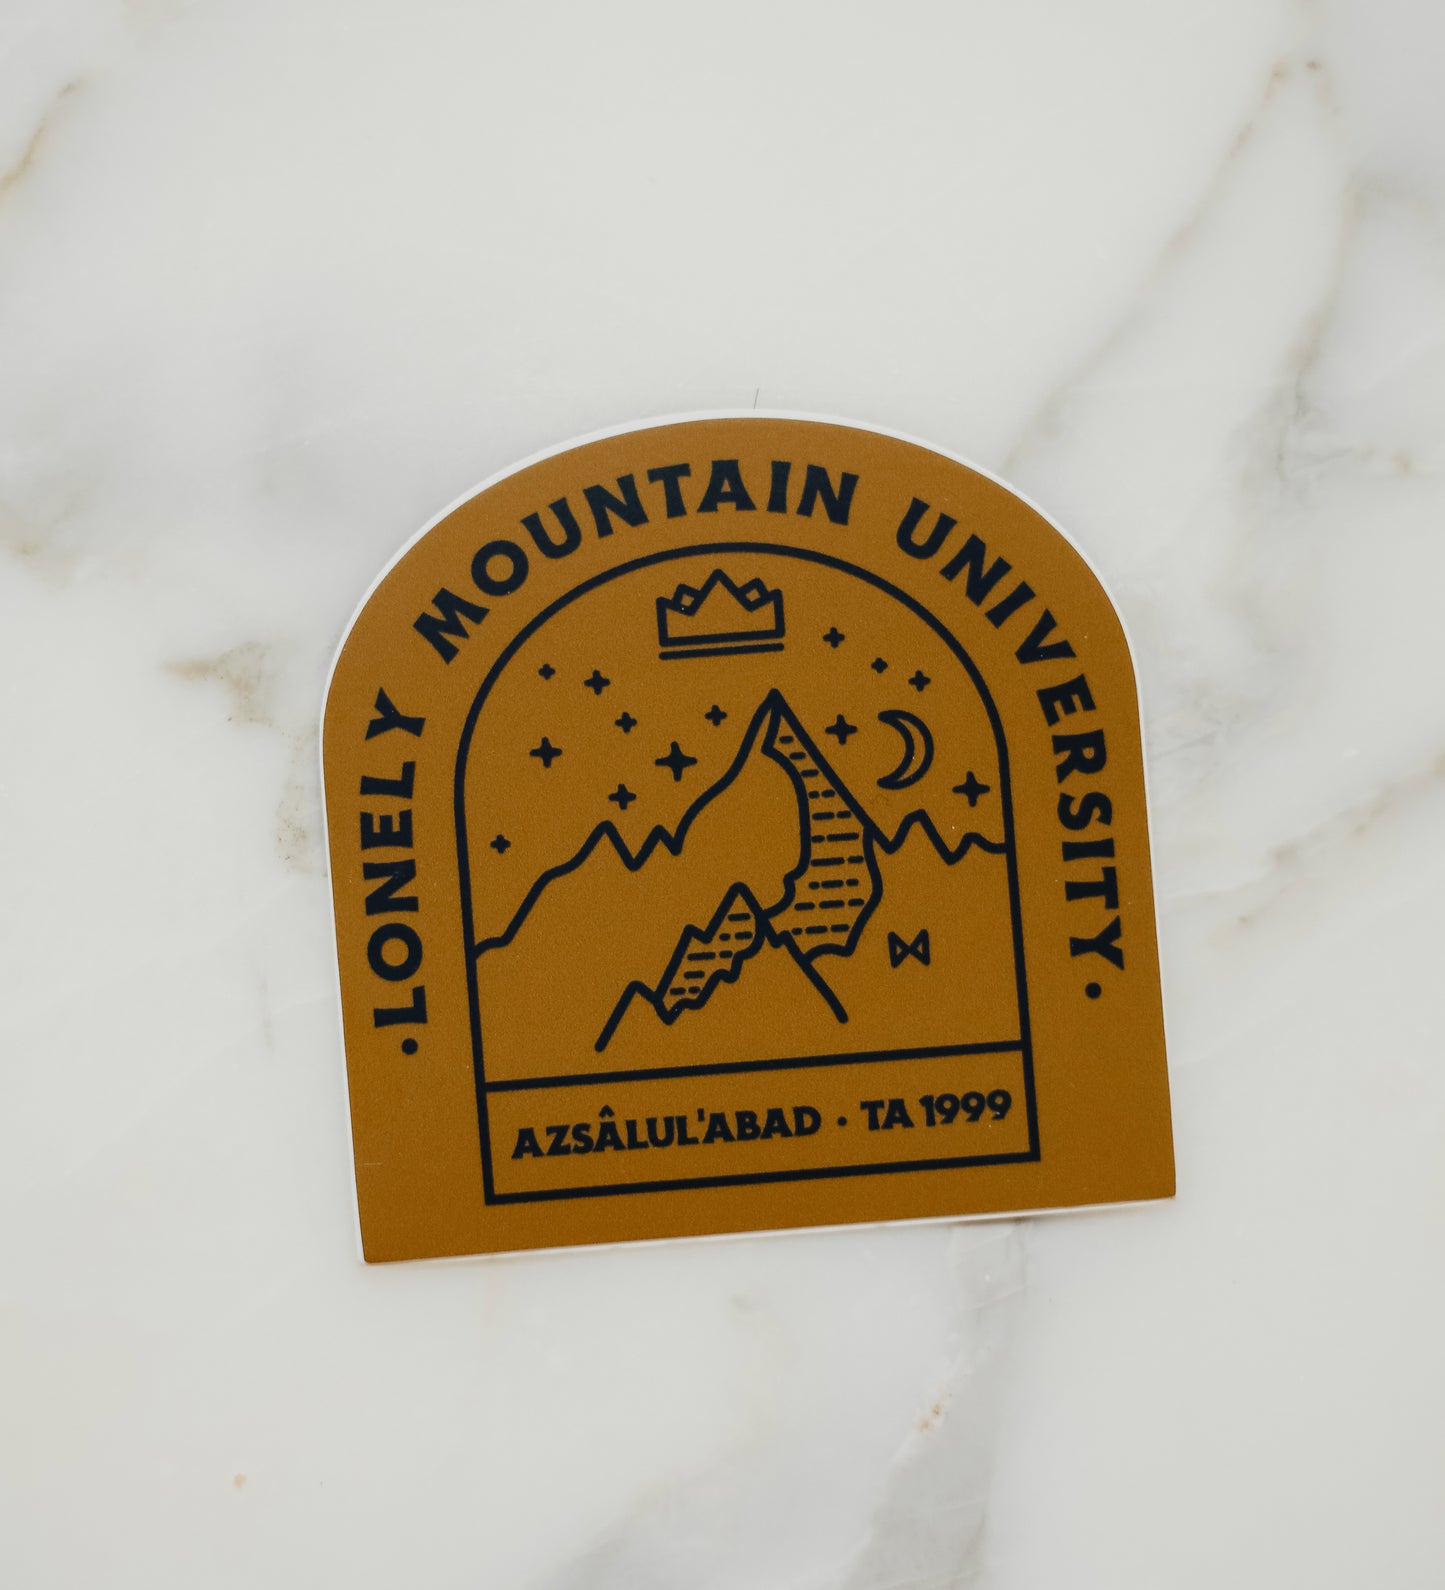 lonely mountain university sticker